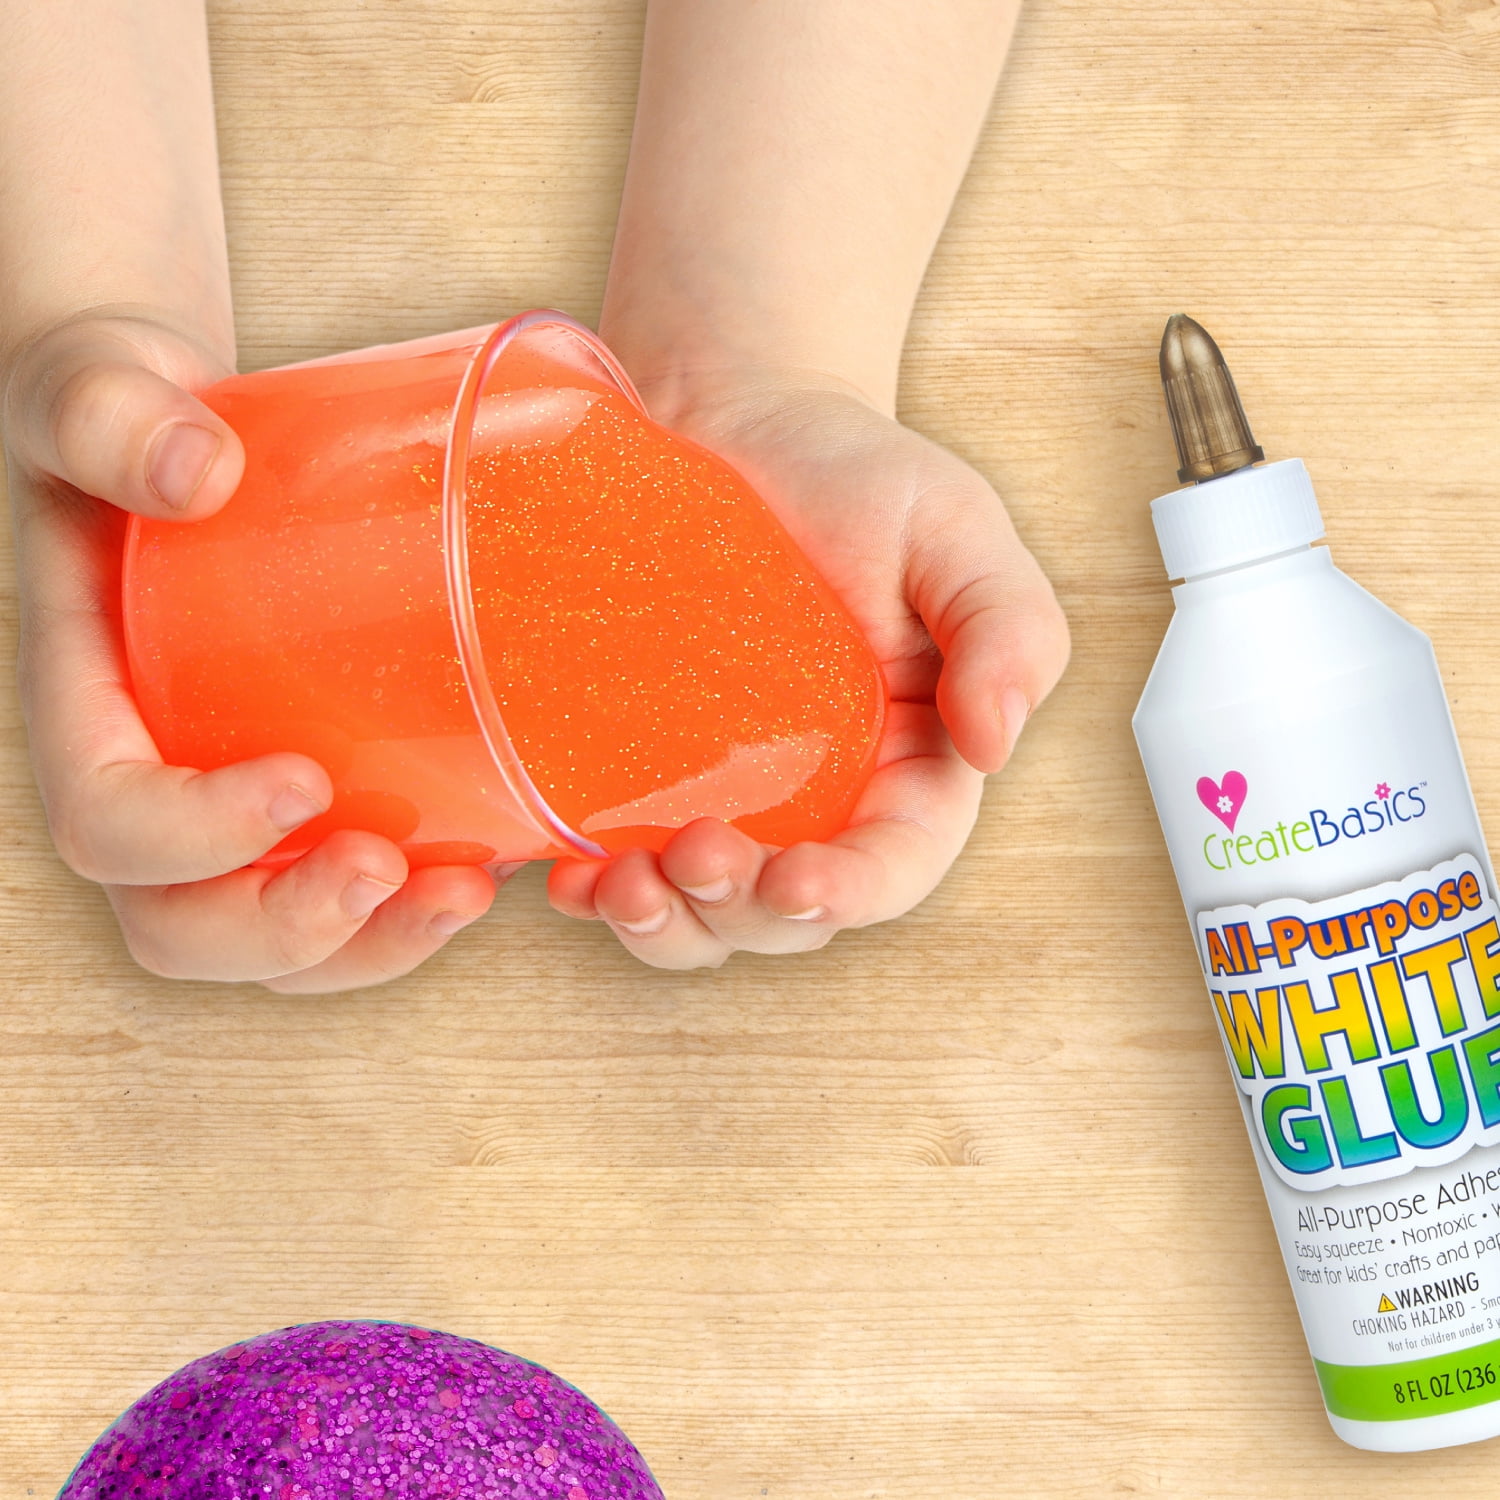 Create Basics All-Purpose Clear Glue 8 fl oz, Great For Kids